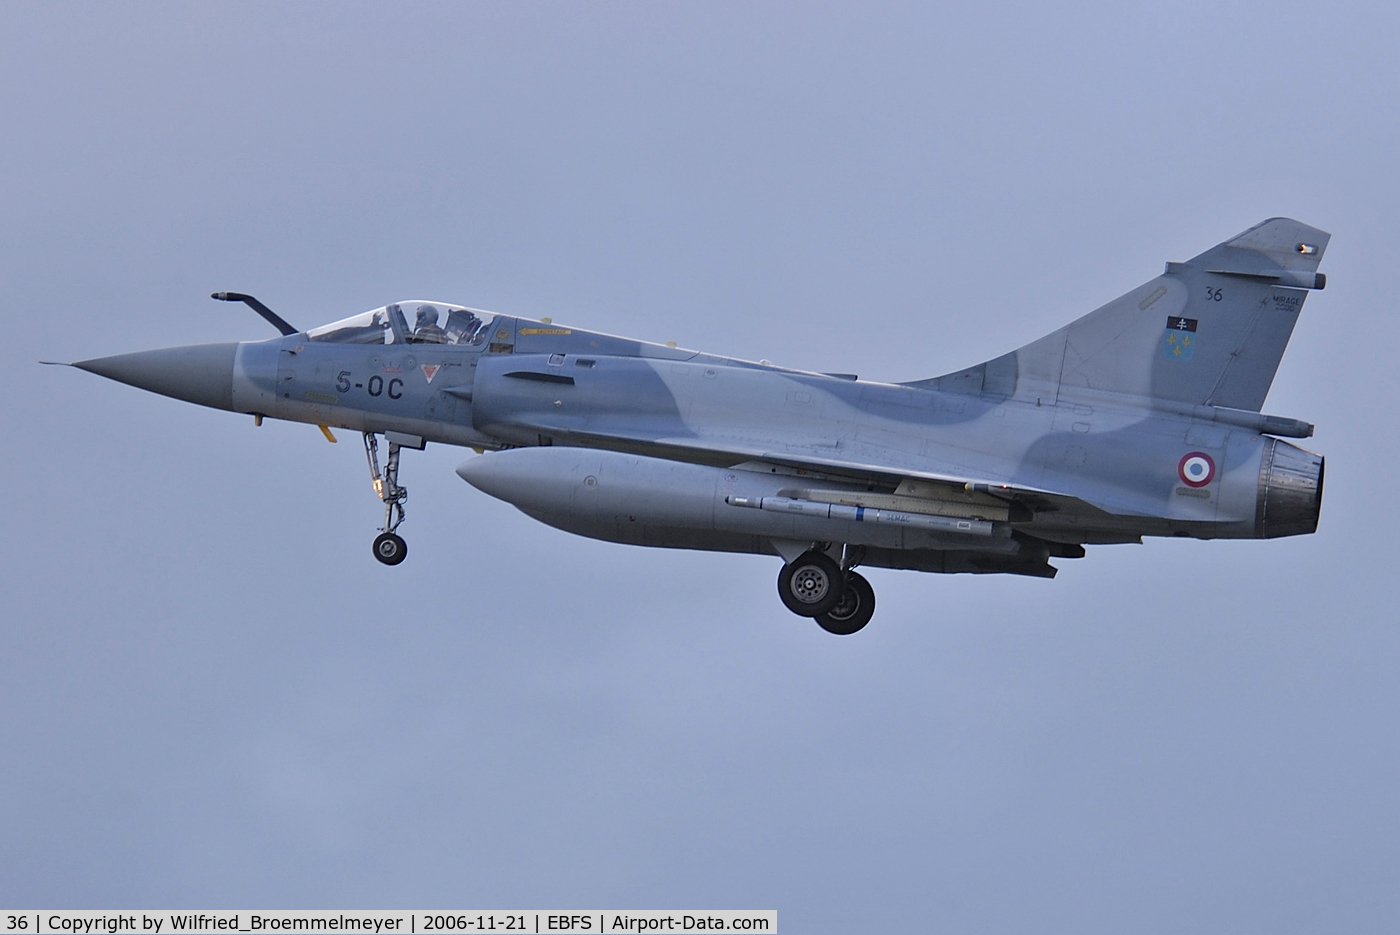 36, Dassault Mirage 2000C C/N Not found 36, Military Code 5-OC - On Approach to Runway 26R.